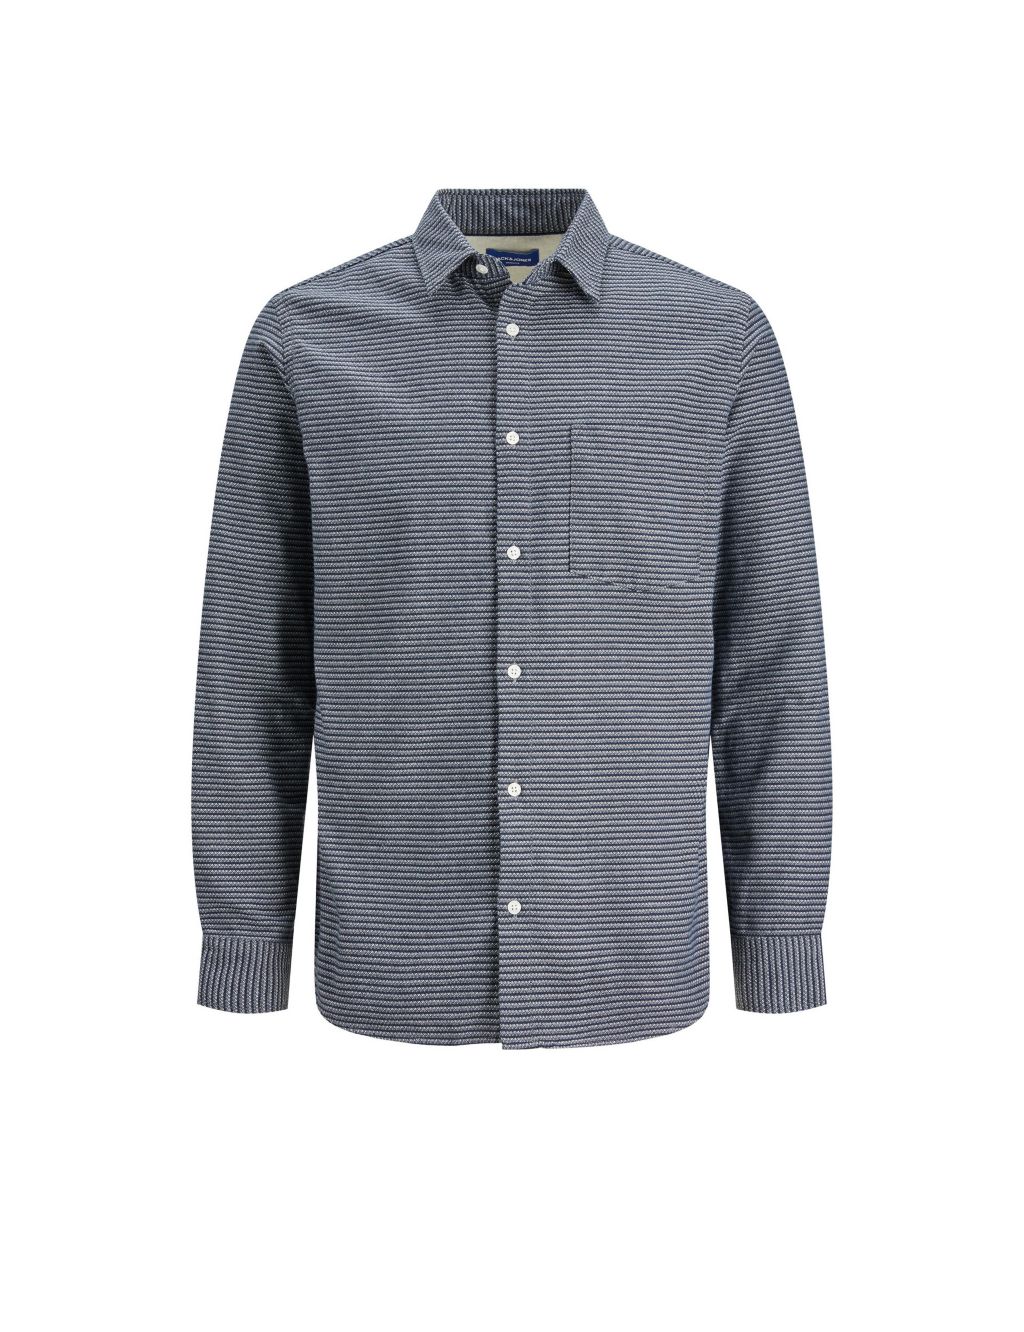 Cotton Rich Striped Oxford Shirt image 2